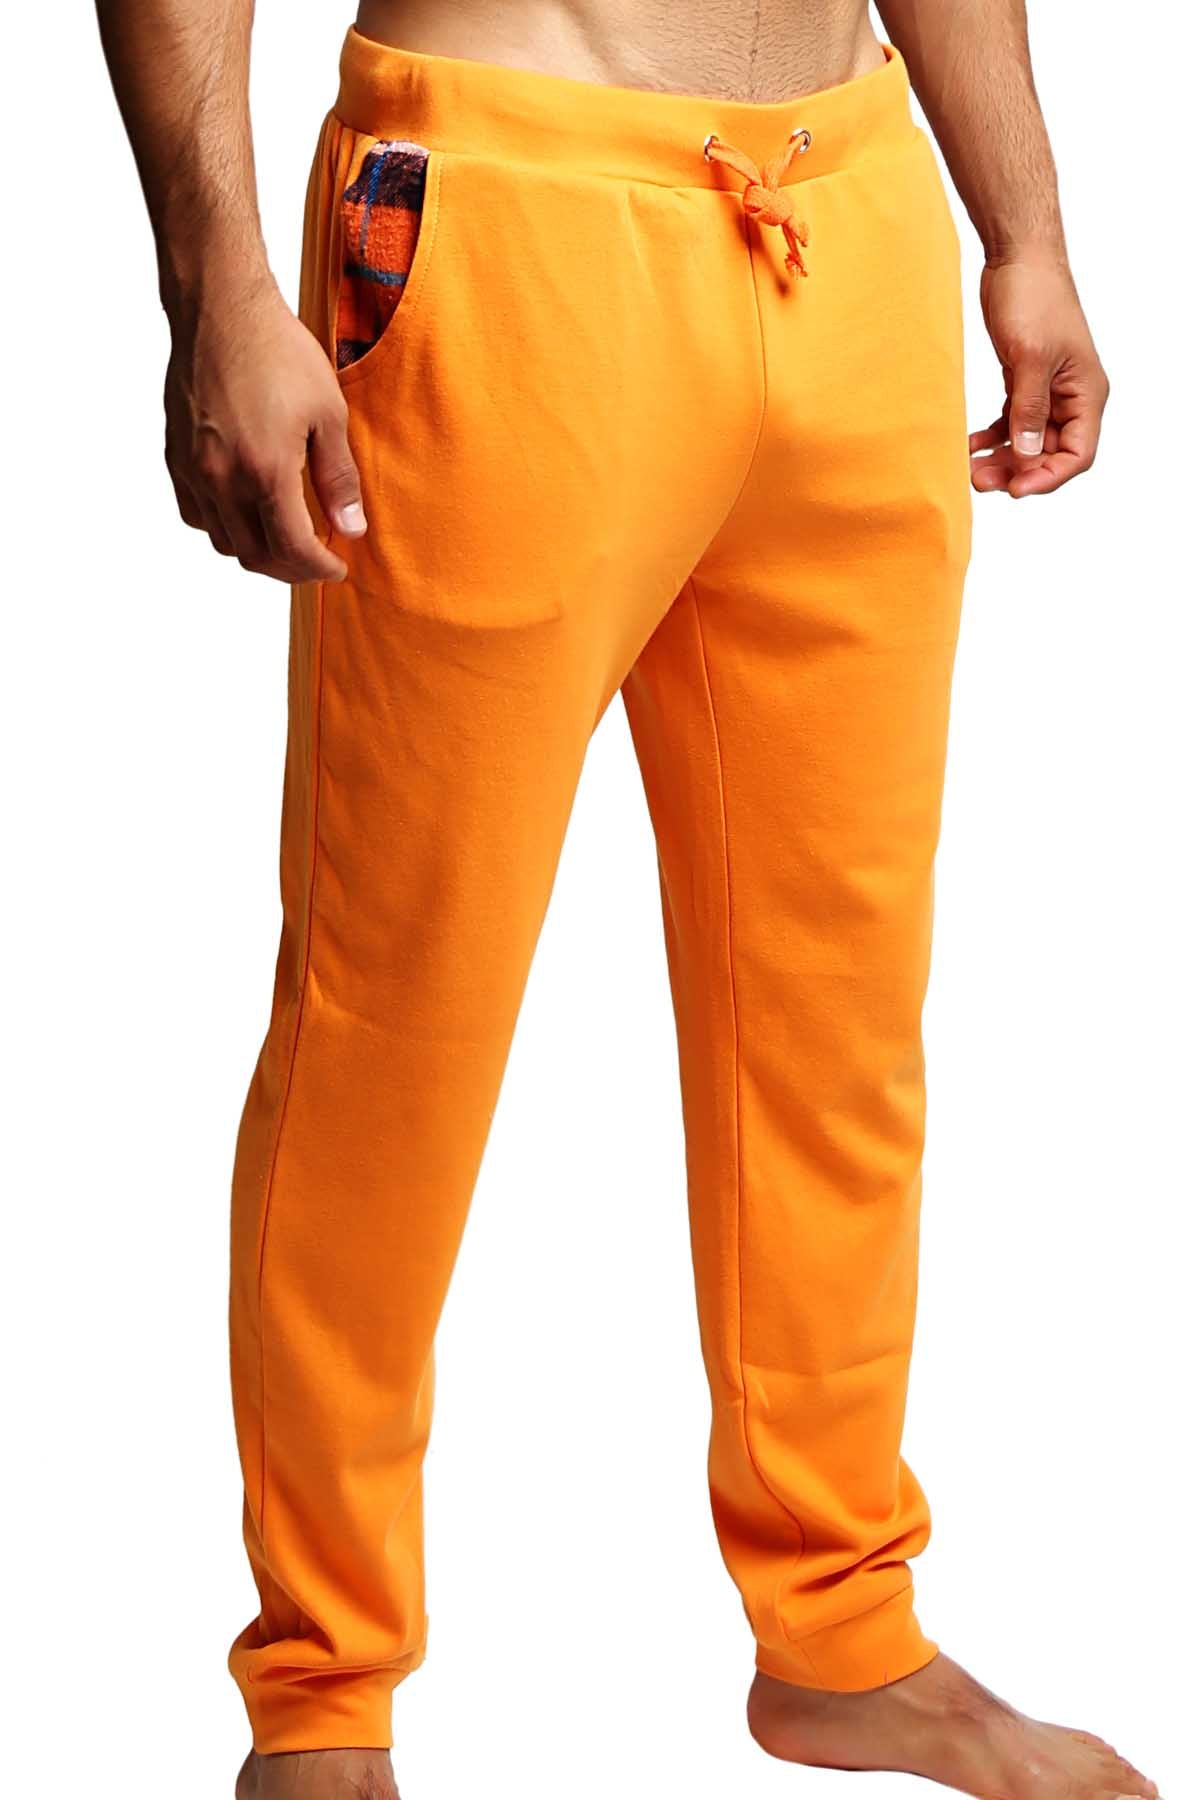 Zutoq Zertile Orange Runner Pant